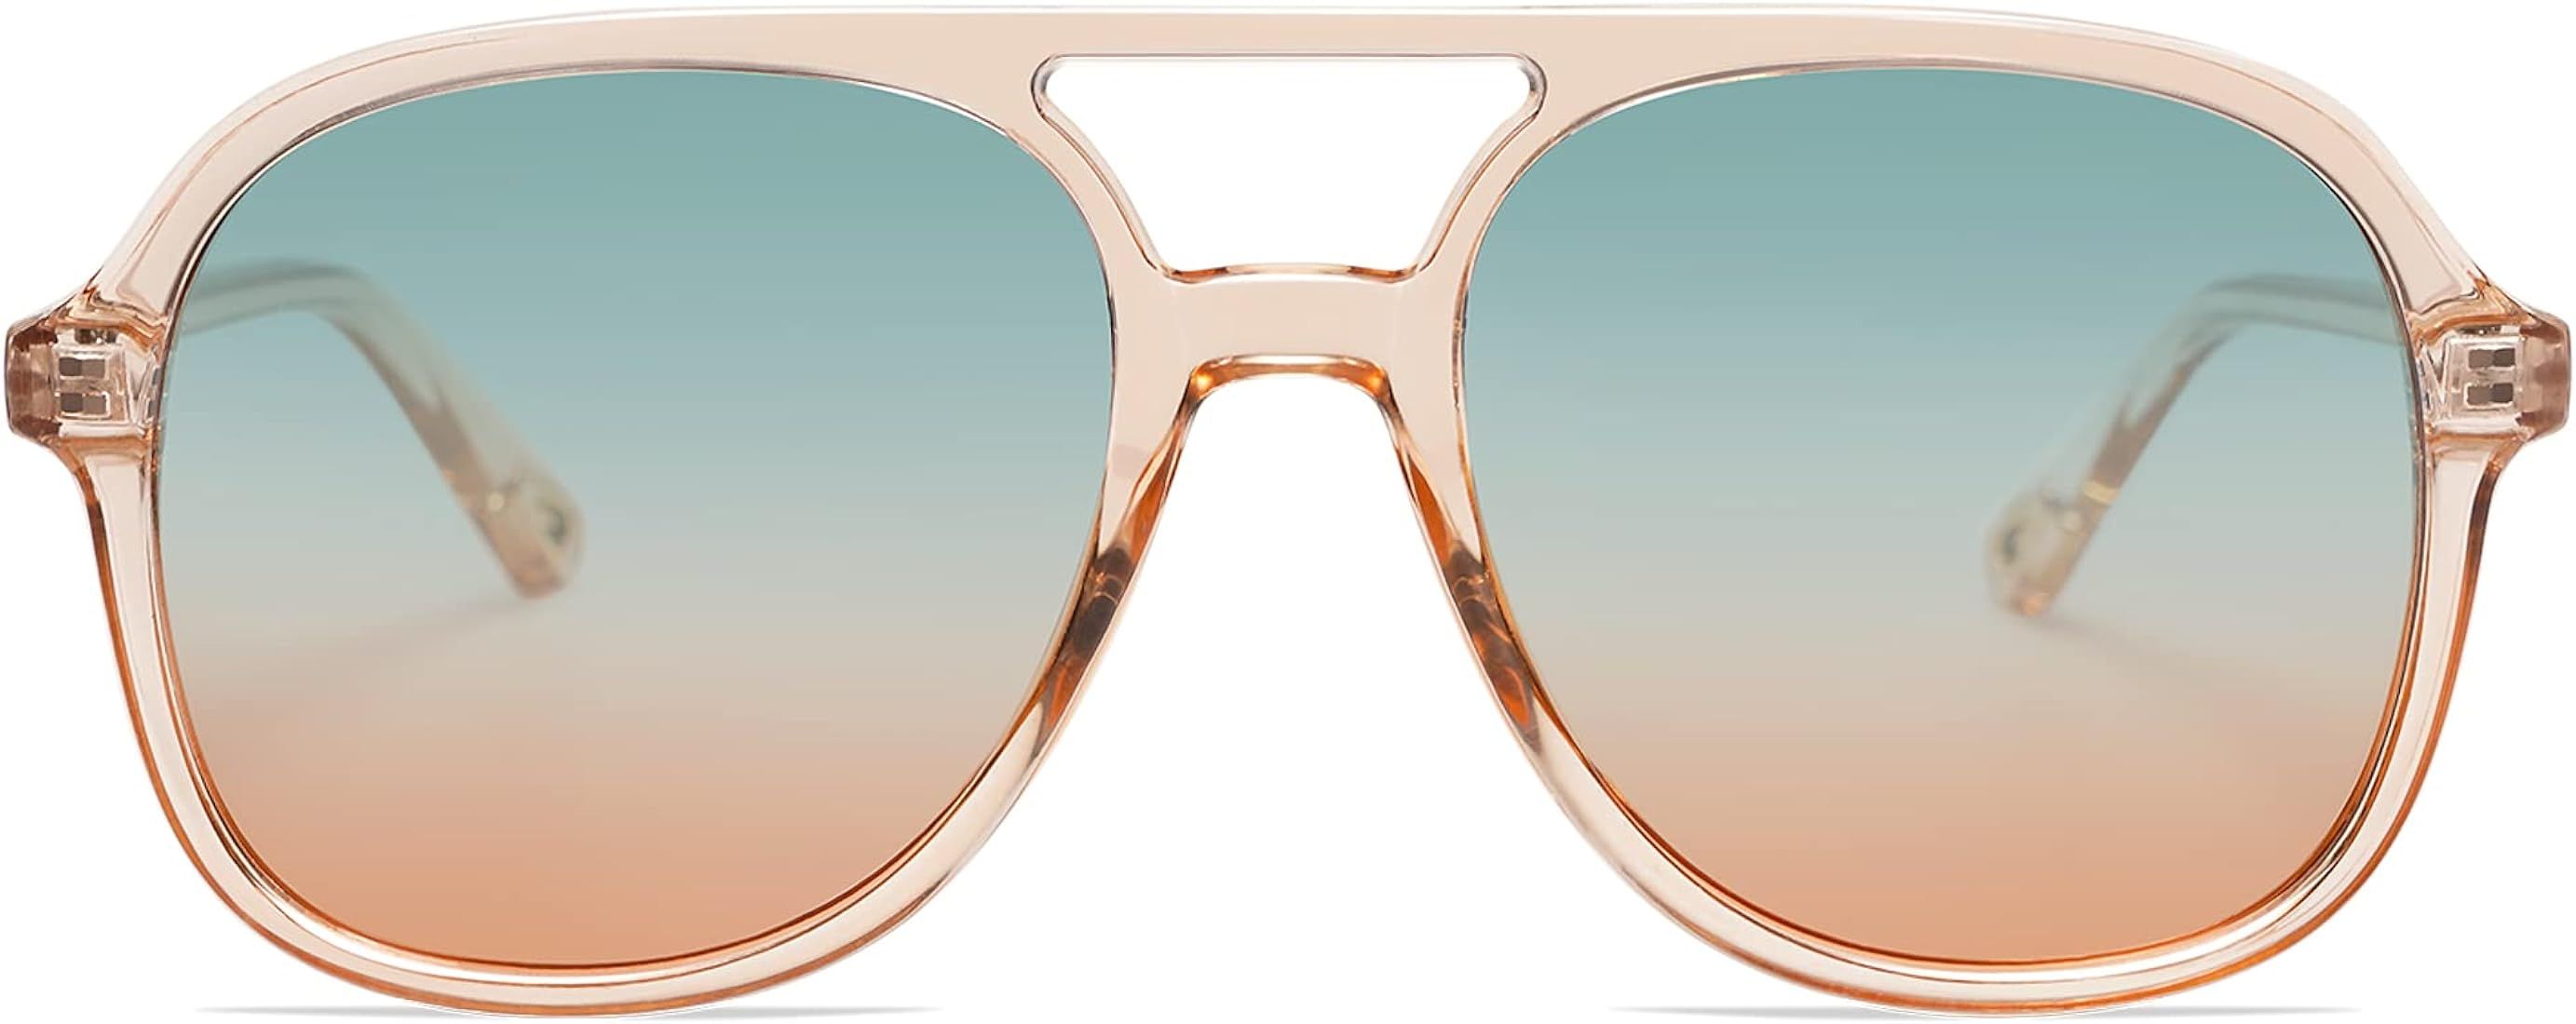 SOJOS Retro Square Polarized Aviator Sunglasses Womens Mens 70s Vintage Double Bridge Sun Glasses | Amazon (US)